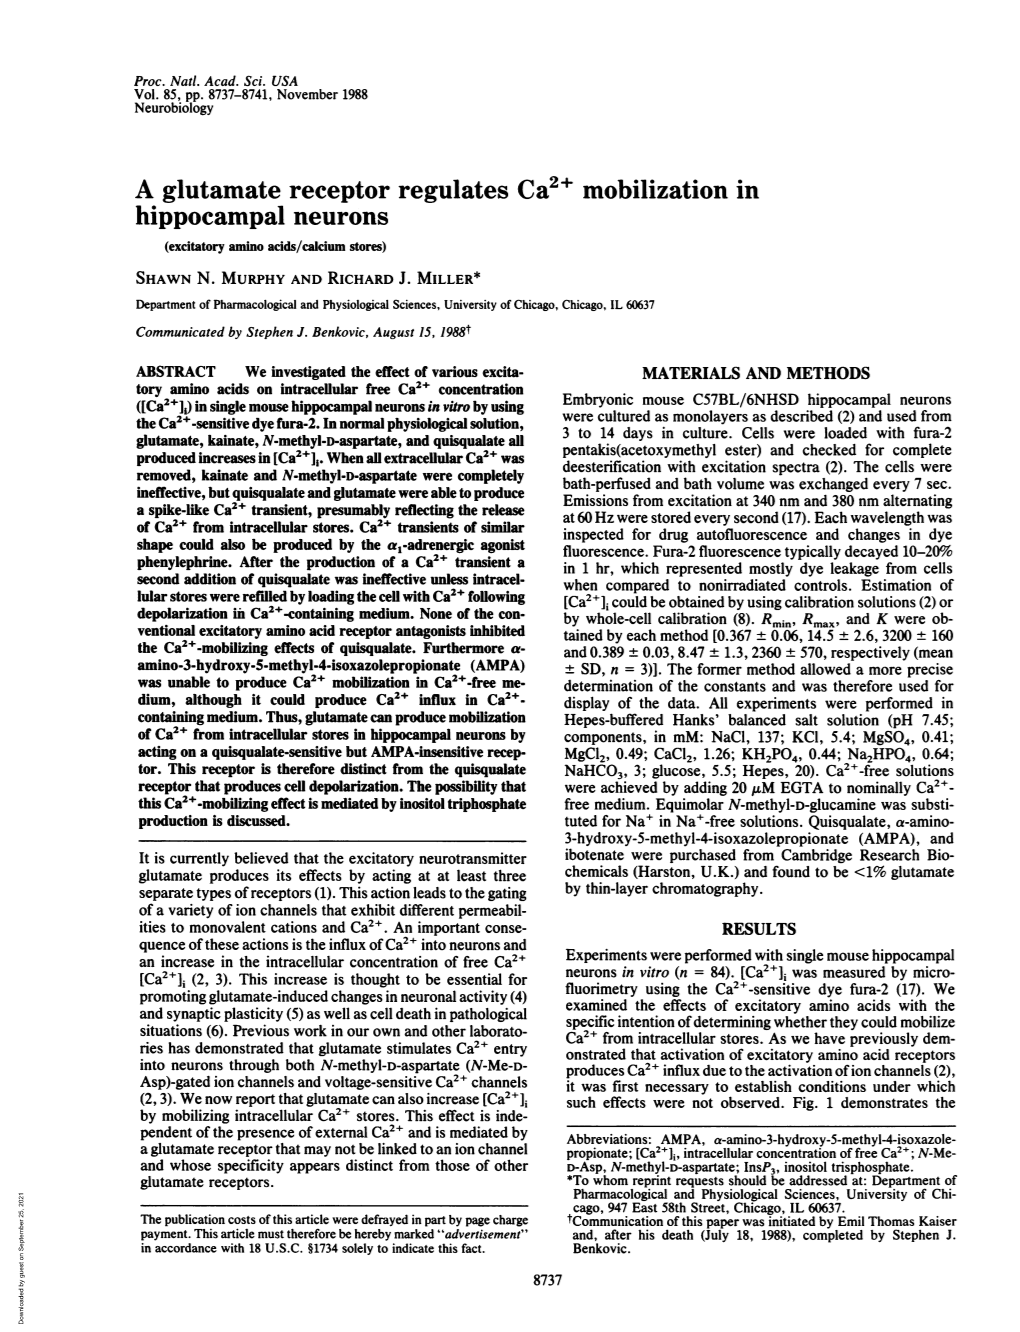 A Glutamate Receptor Regulates Ca2" Mobilization in Hippocampal Neurons (Excitatory Amino Acids/Calcium Stores) SHAWN N